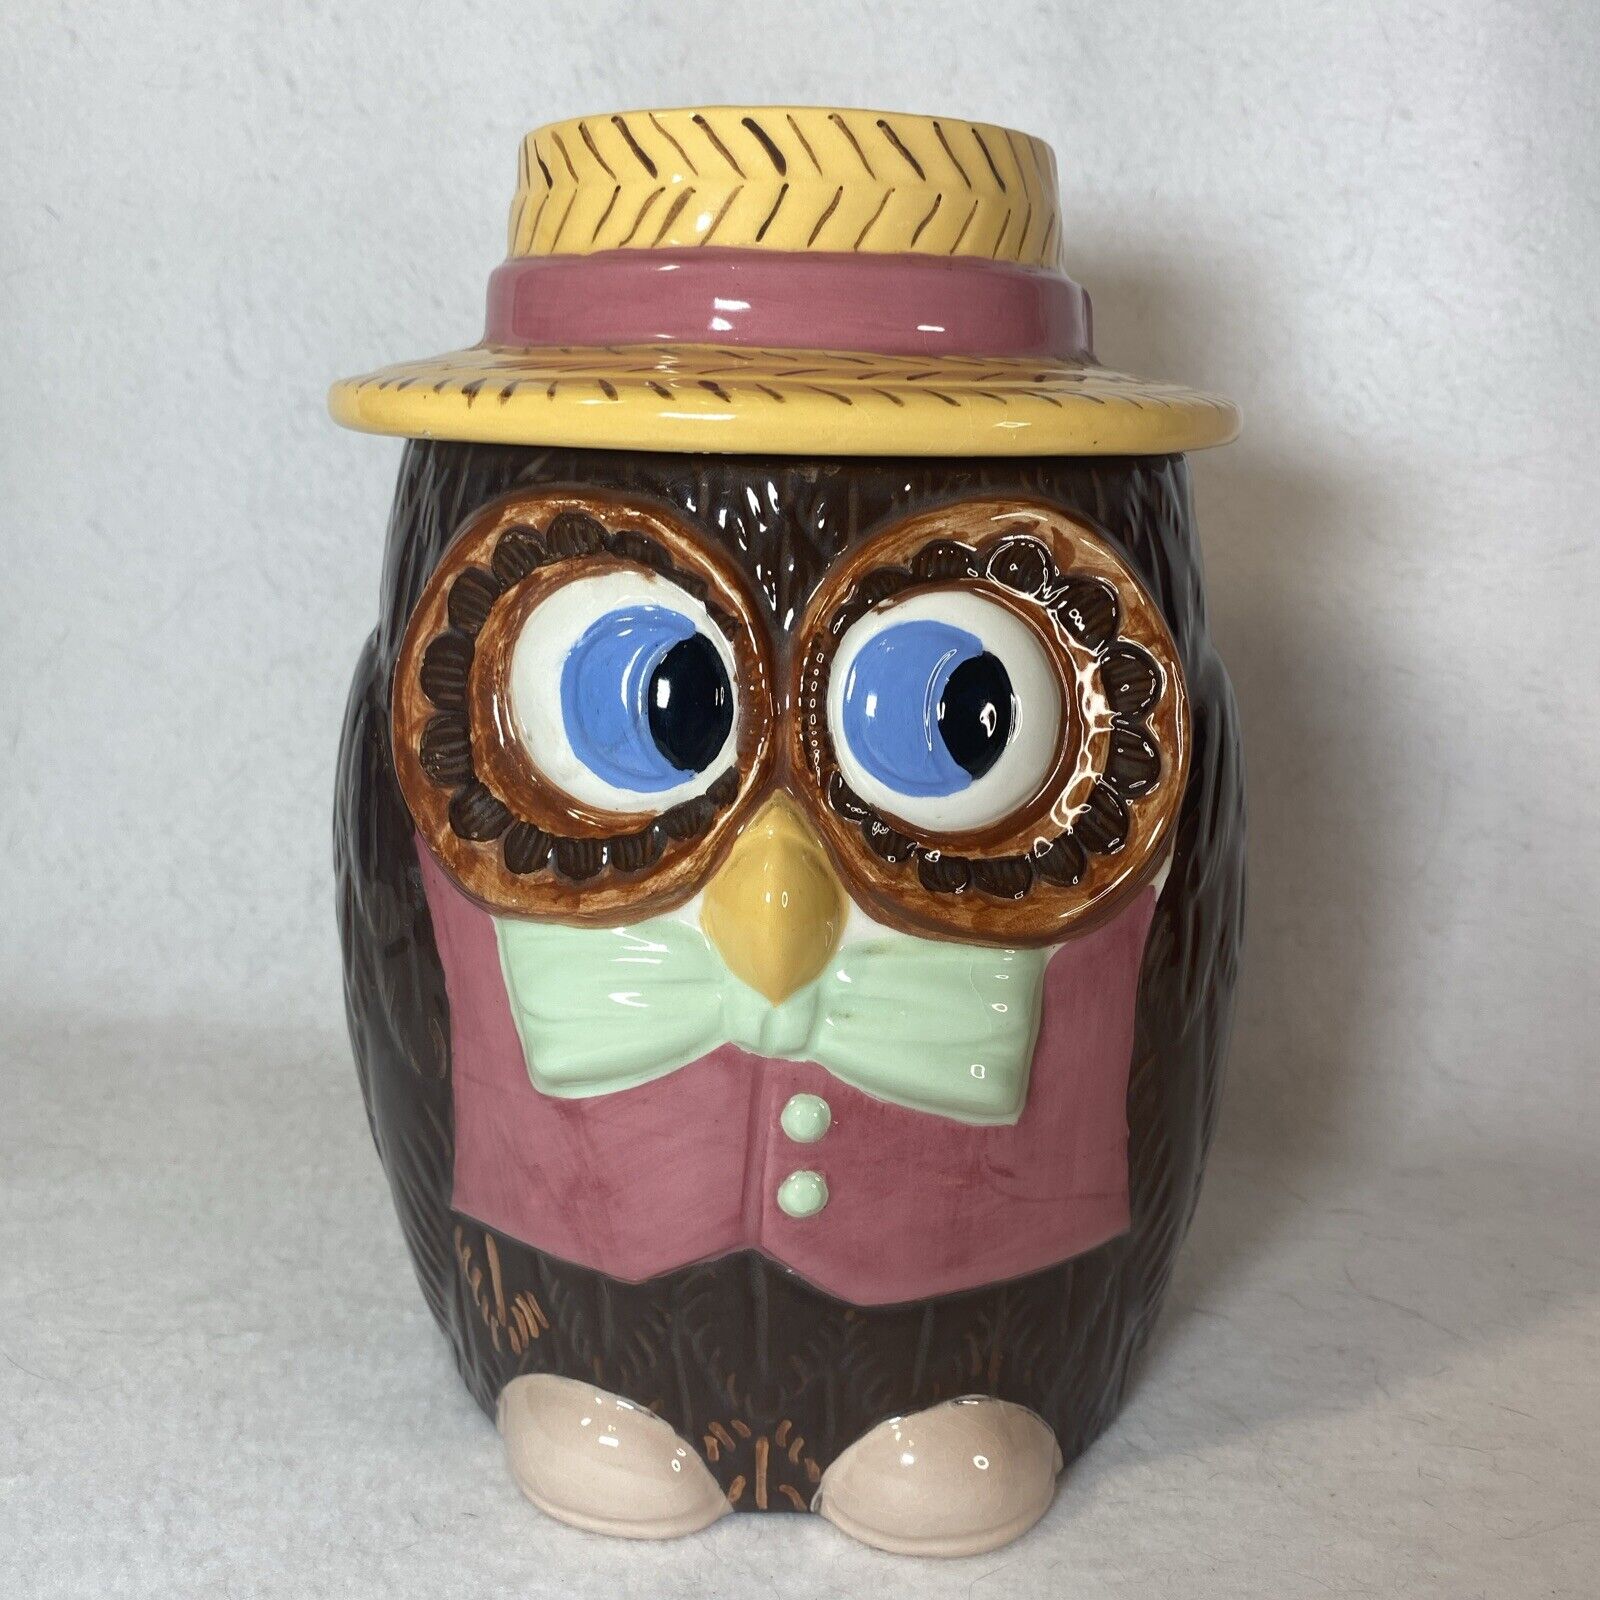 Vintage Owl Cookie Jar Antique Kitchenware MCM Mid Century Modern 9.5” Tall